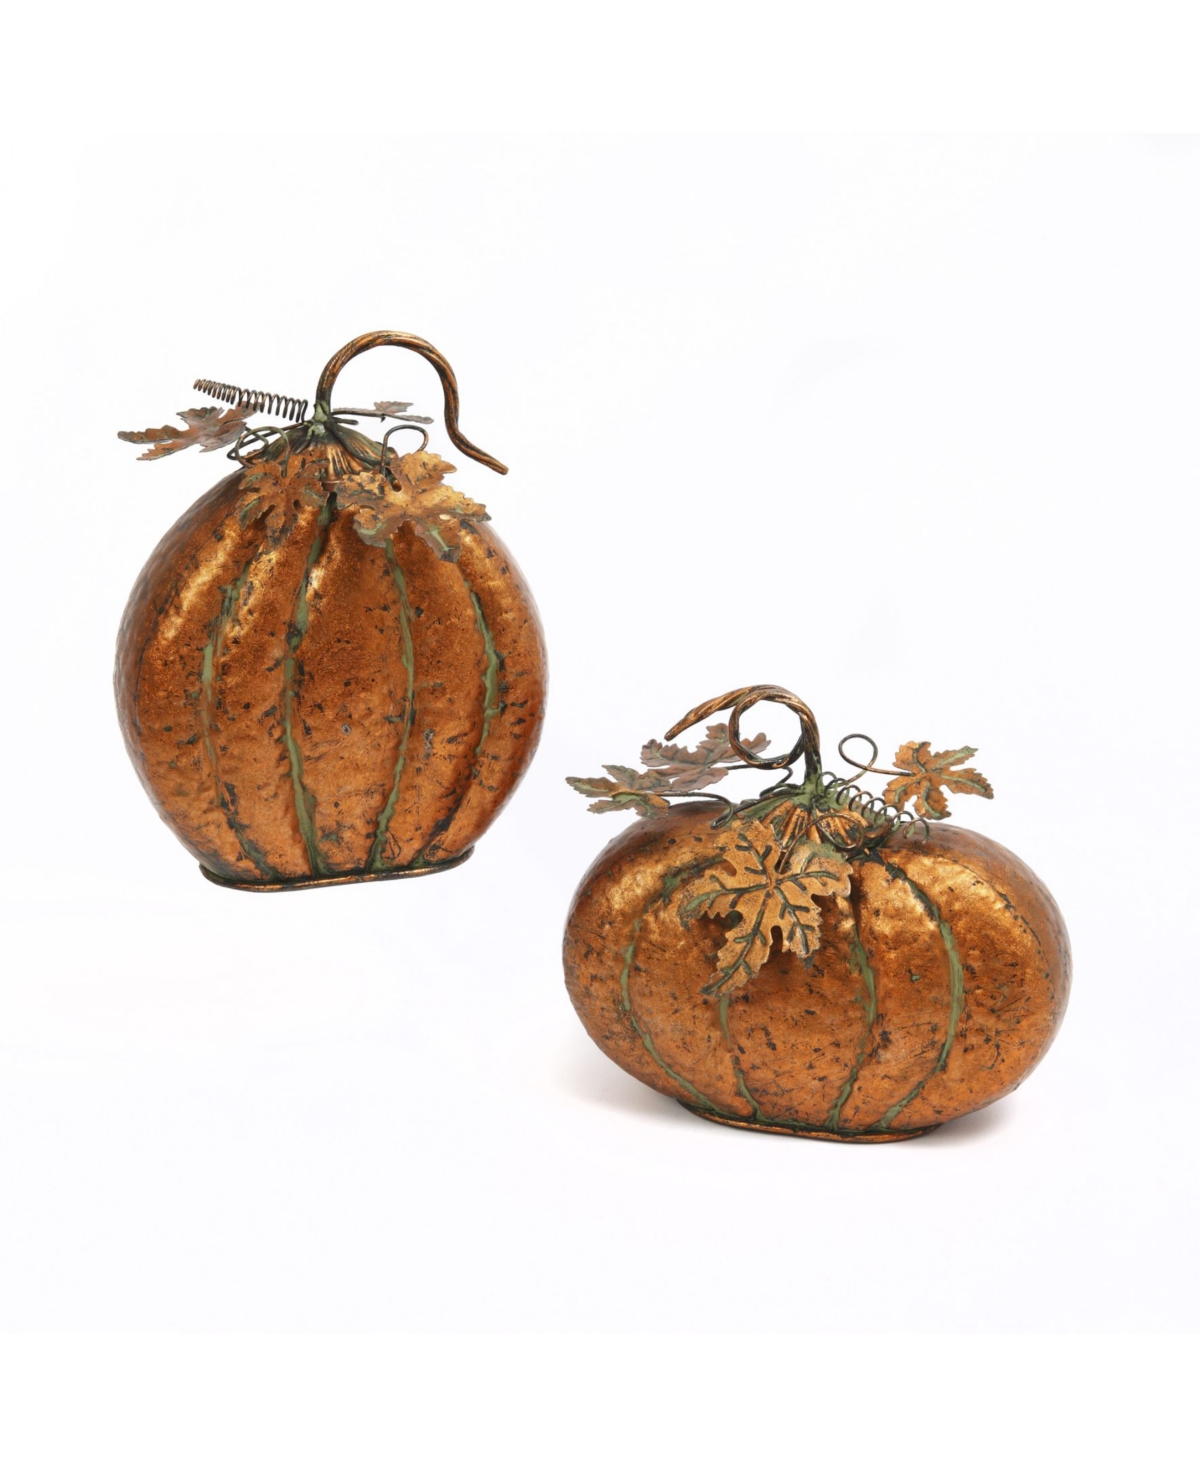 Assorted Harvest Tabletop Pumpkins with Leaf Accents Set, 2 Pieces - Orange